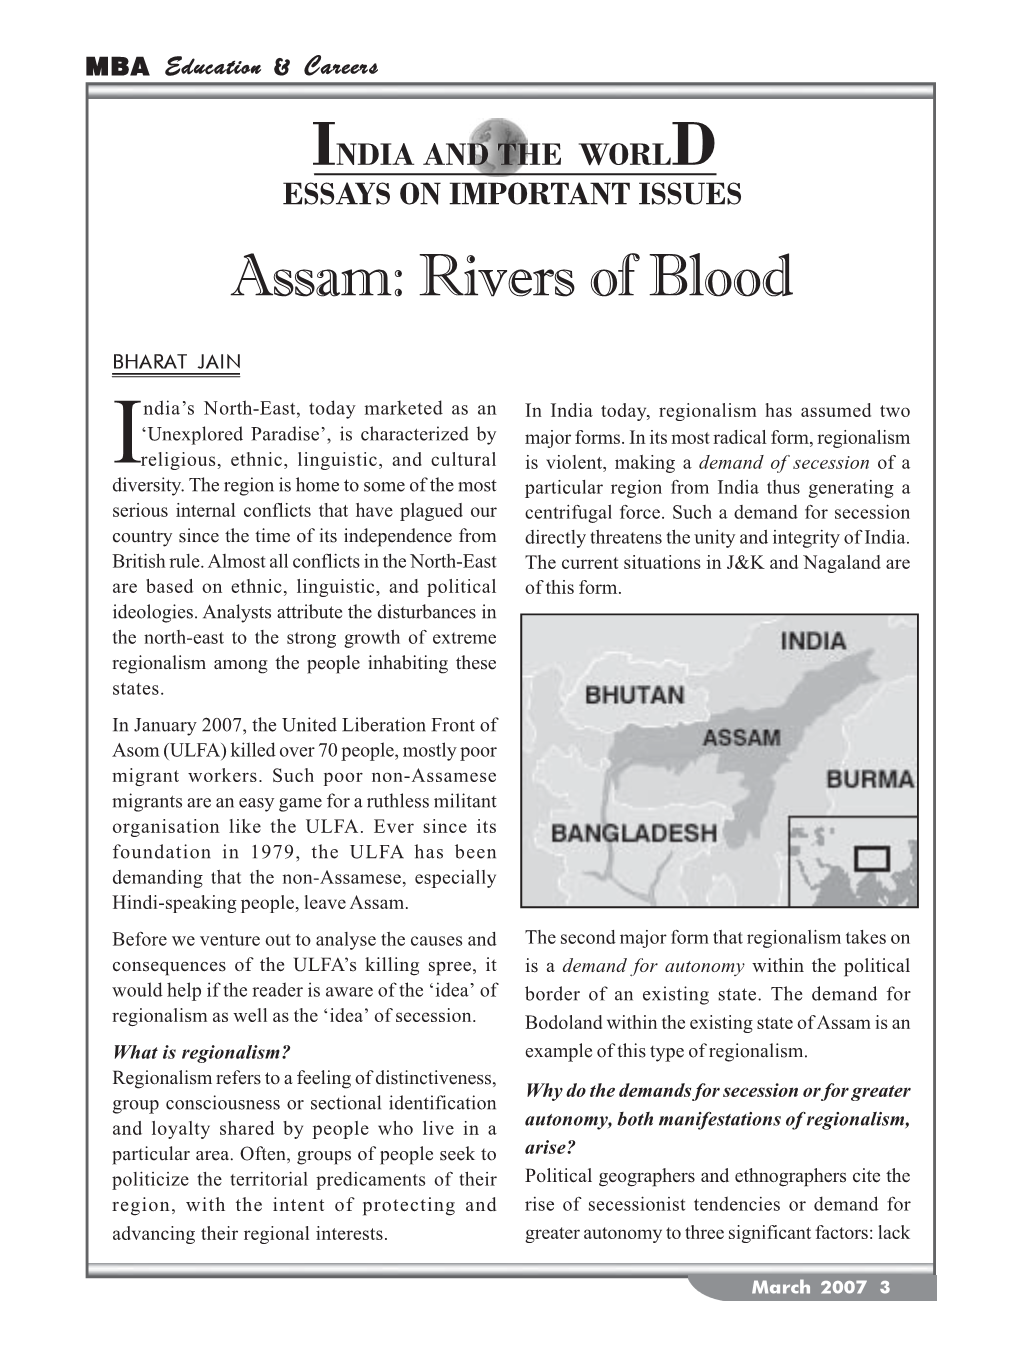 Assam: Rivers of Blood